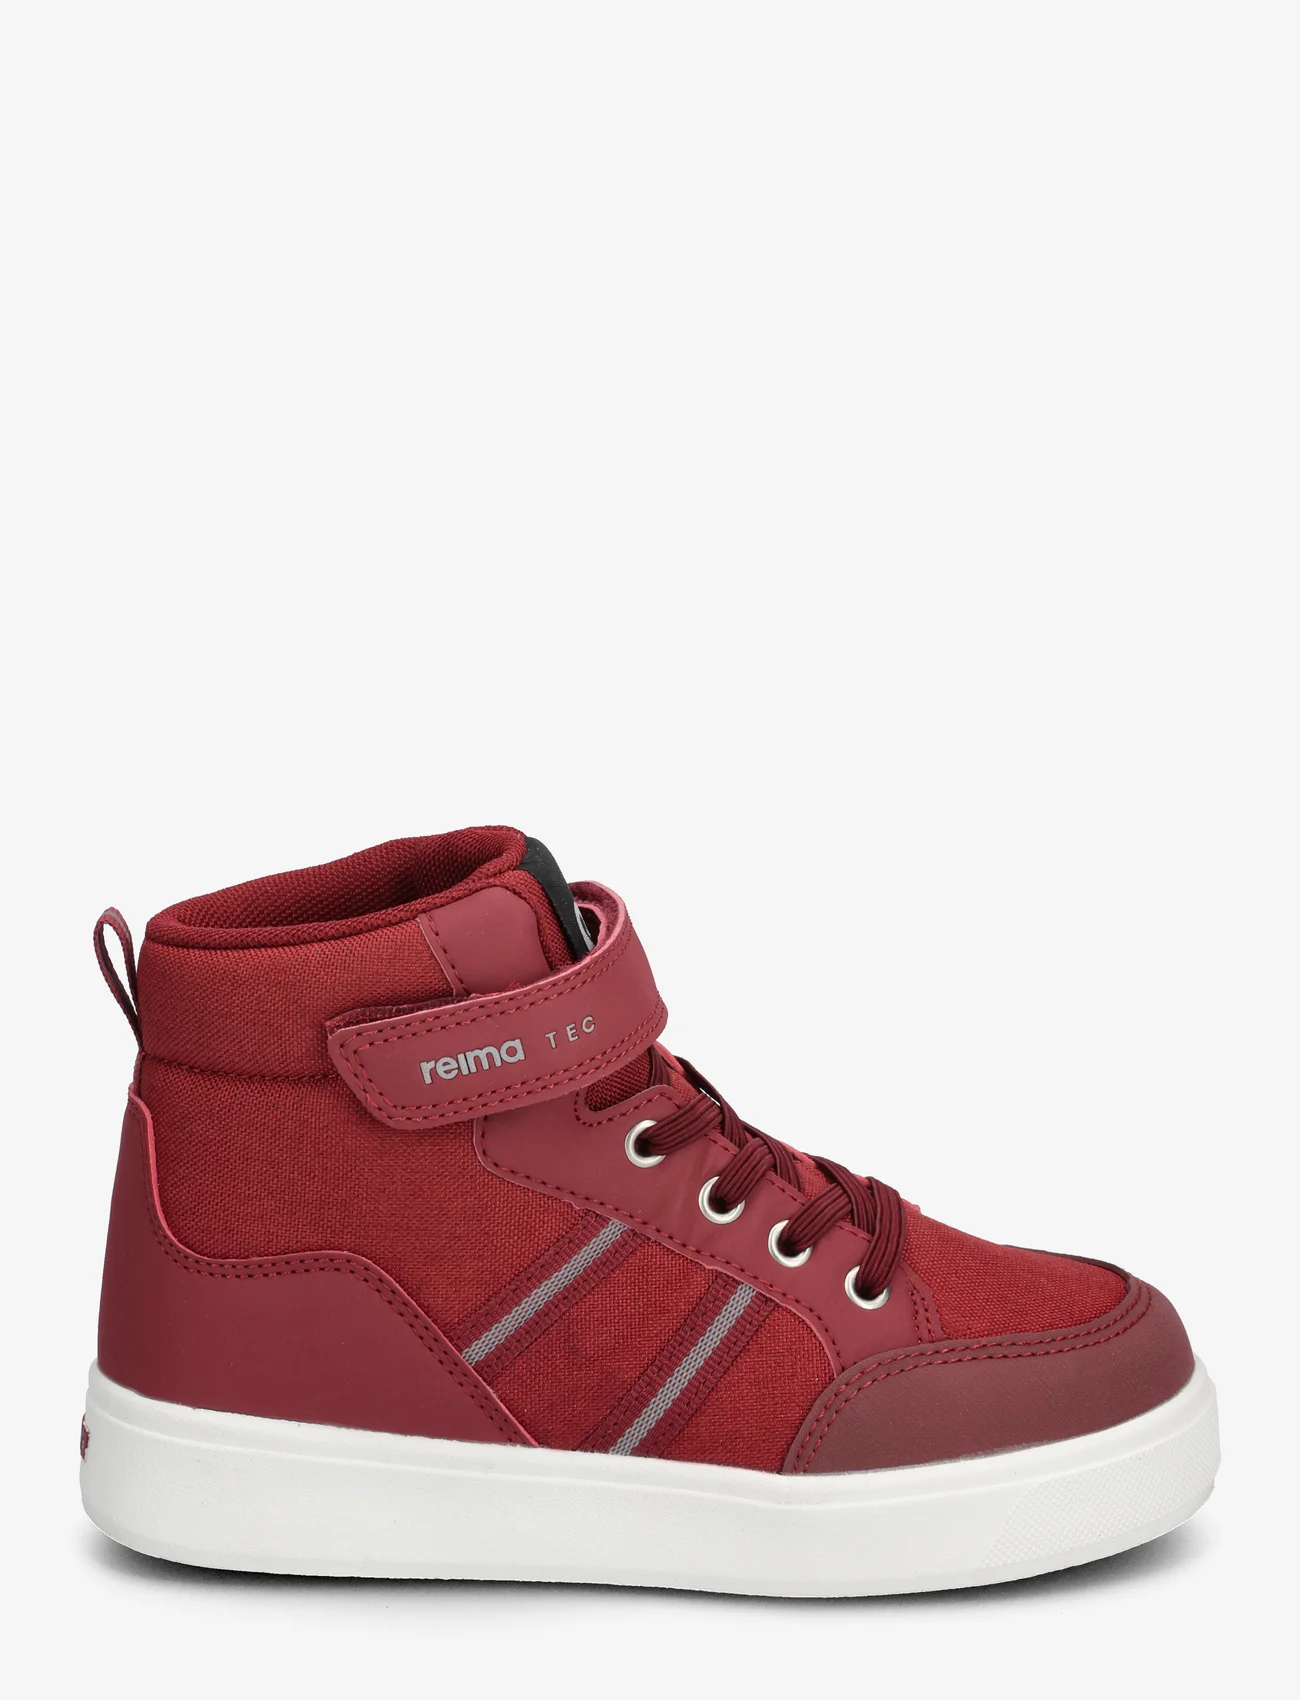 Reima - Reimatec sneakers, Skeitti - high tops - jam red - 1